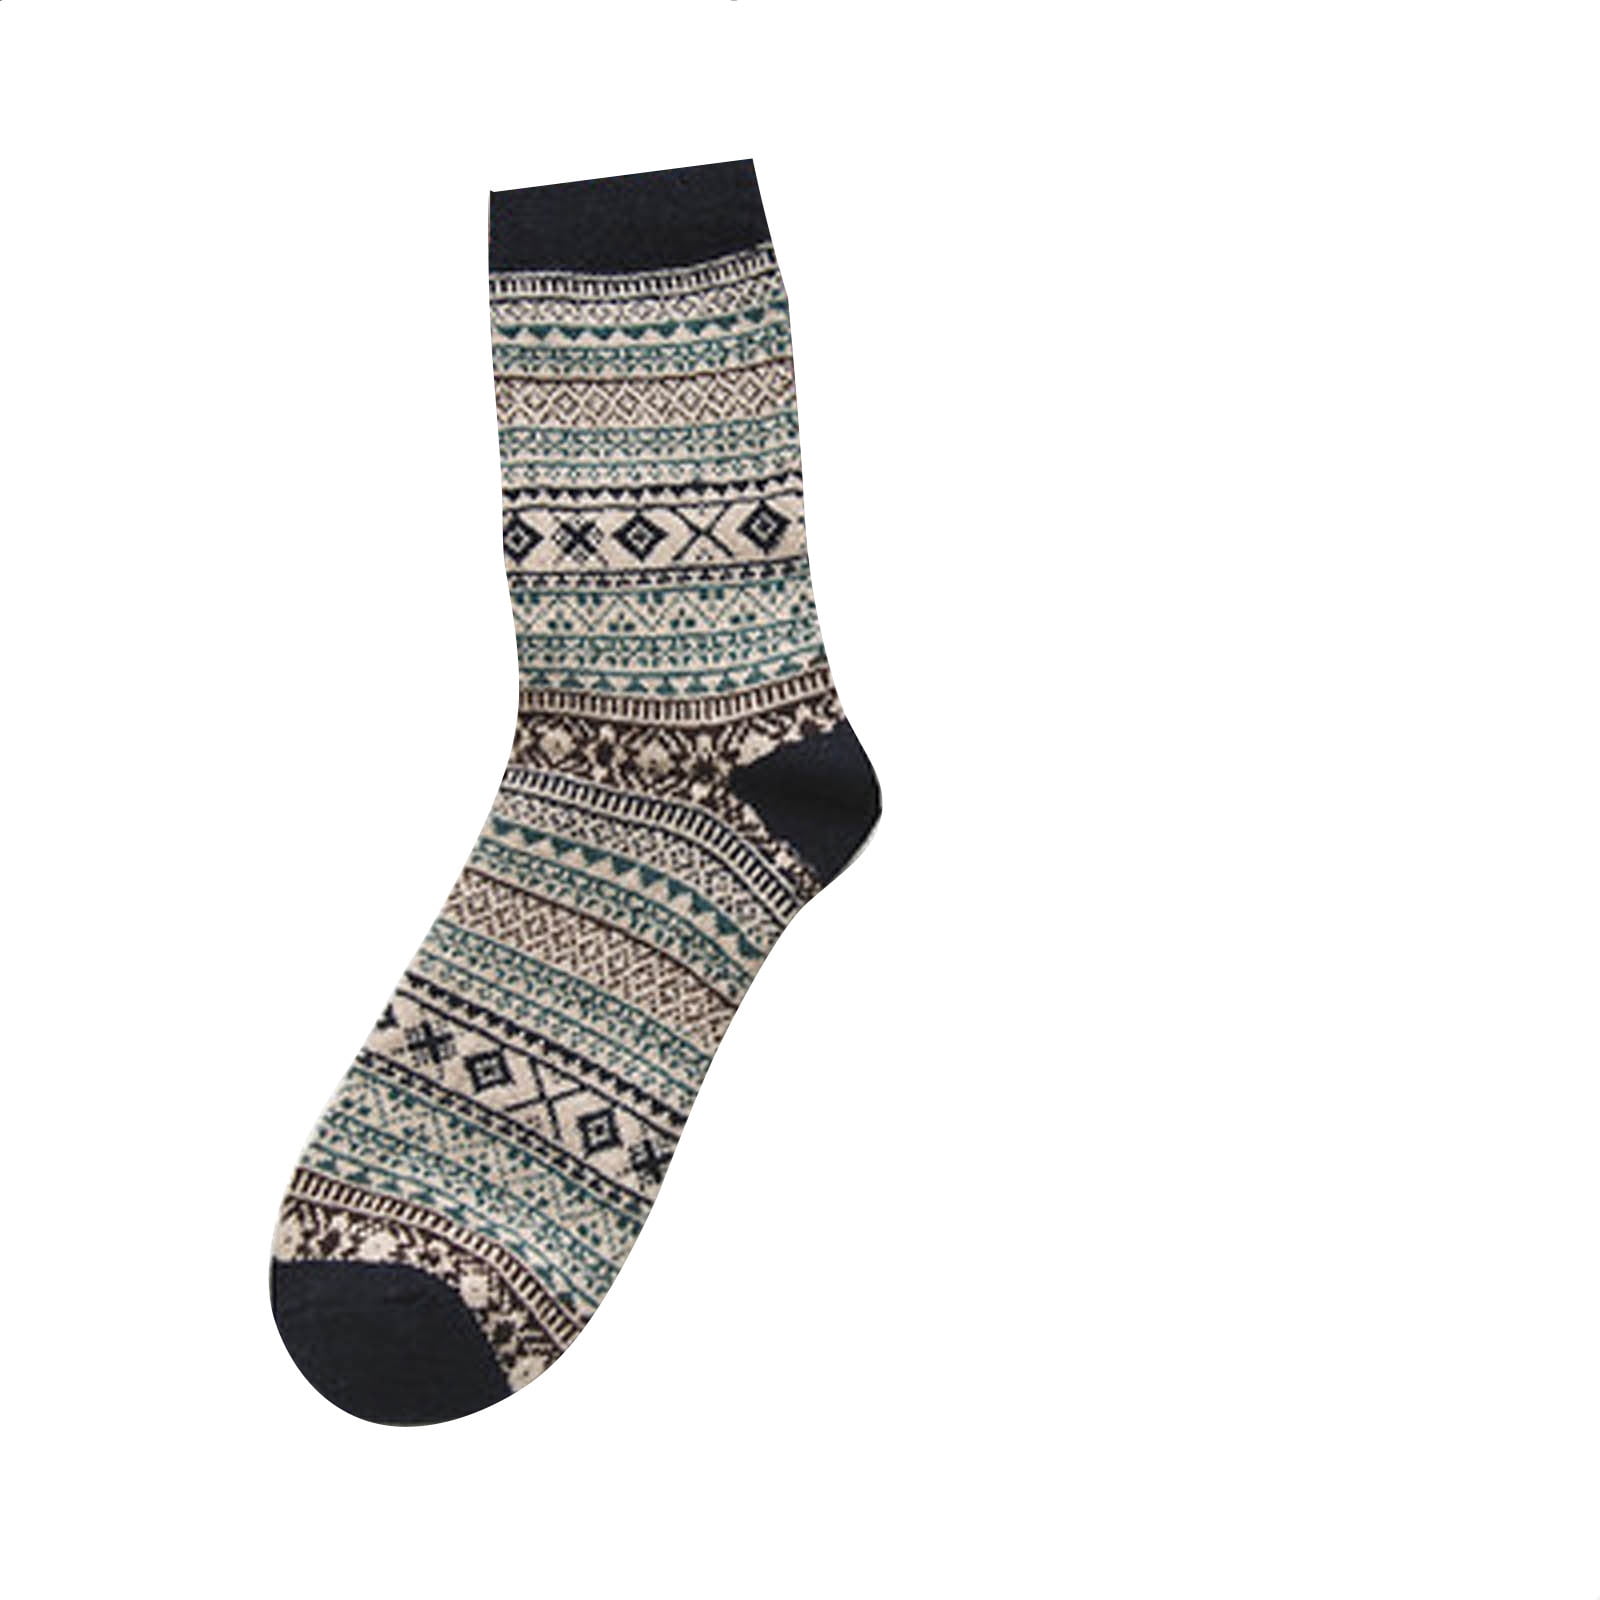 Thermal Socks Merino Wool Socks For Women and Men - 6 Pairs of Extra-Mens  Warm Socks, Winter Socks, Hiking Socks, Boot Socks by Debra Weitzner Red  9-11 